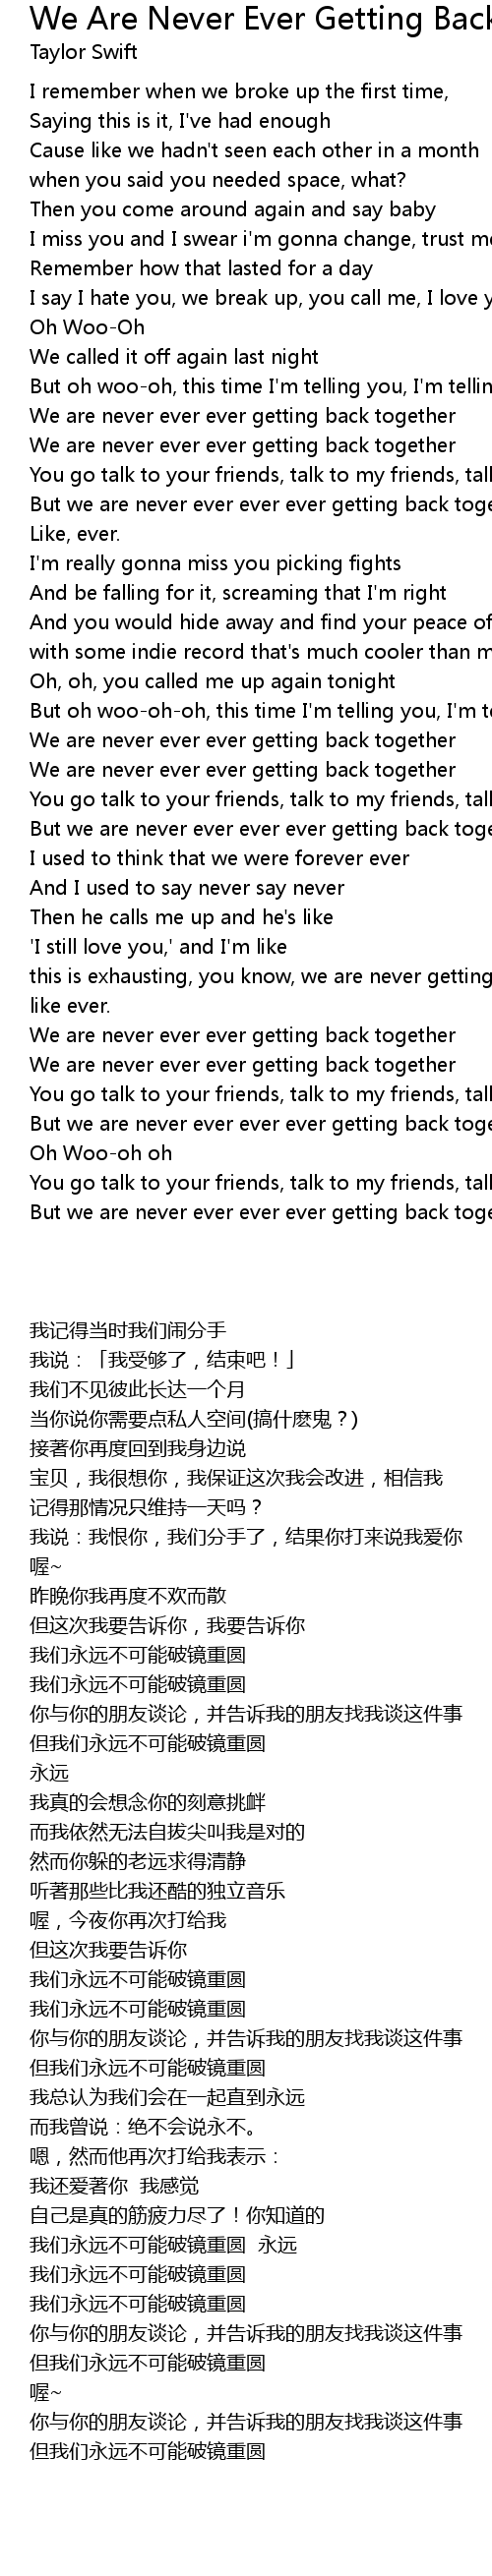 We Are Never Ever Getting Back Together Lyrics Follow Lyrics